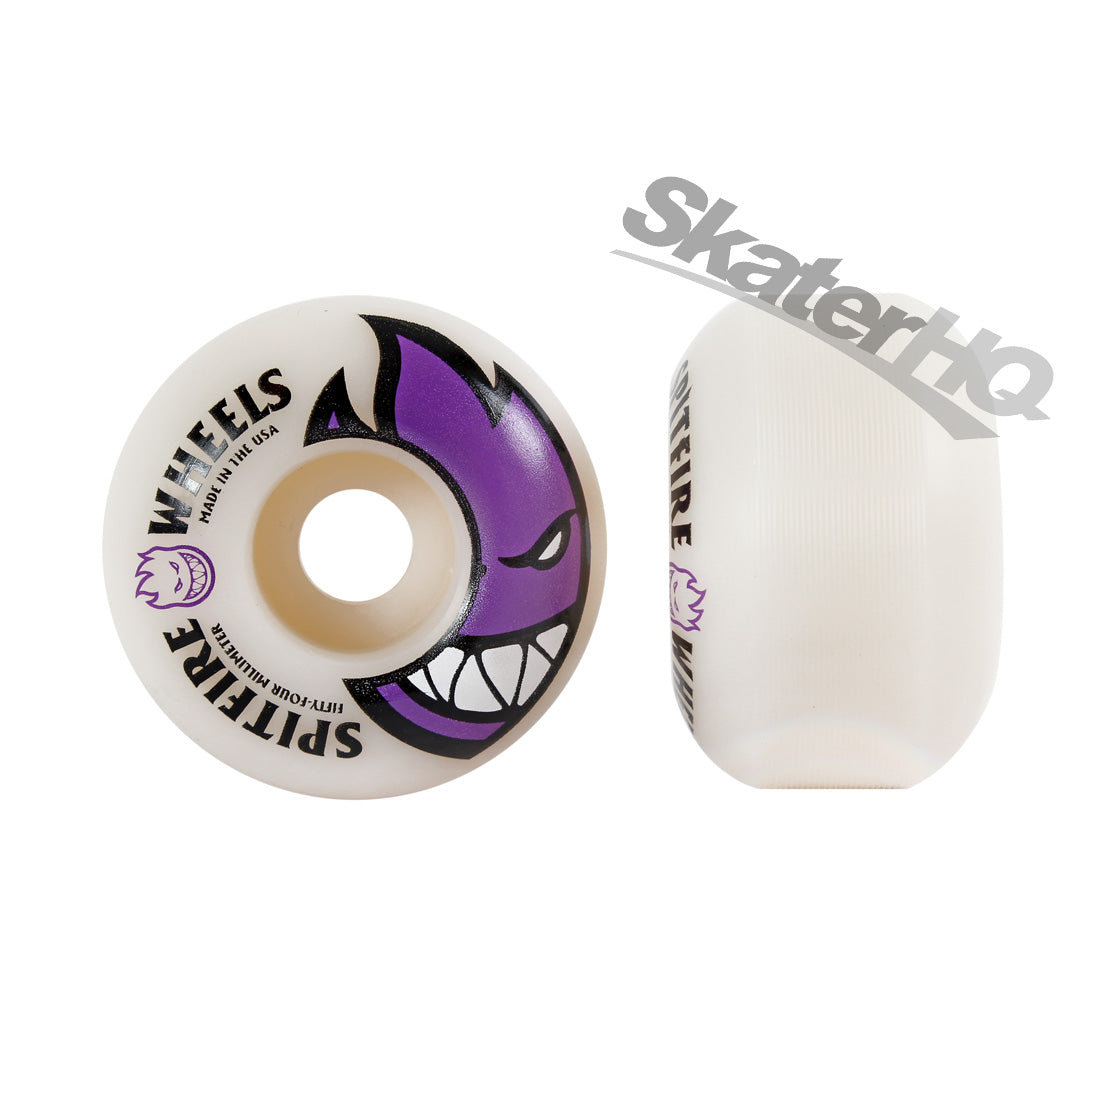 Spitfire Bighead 54mm/99A - White/Purple Skateboard Wheels